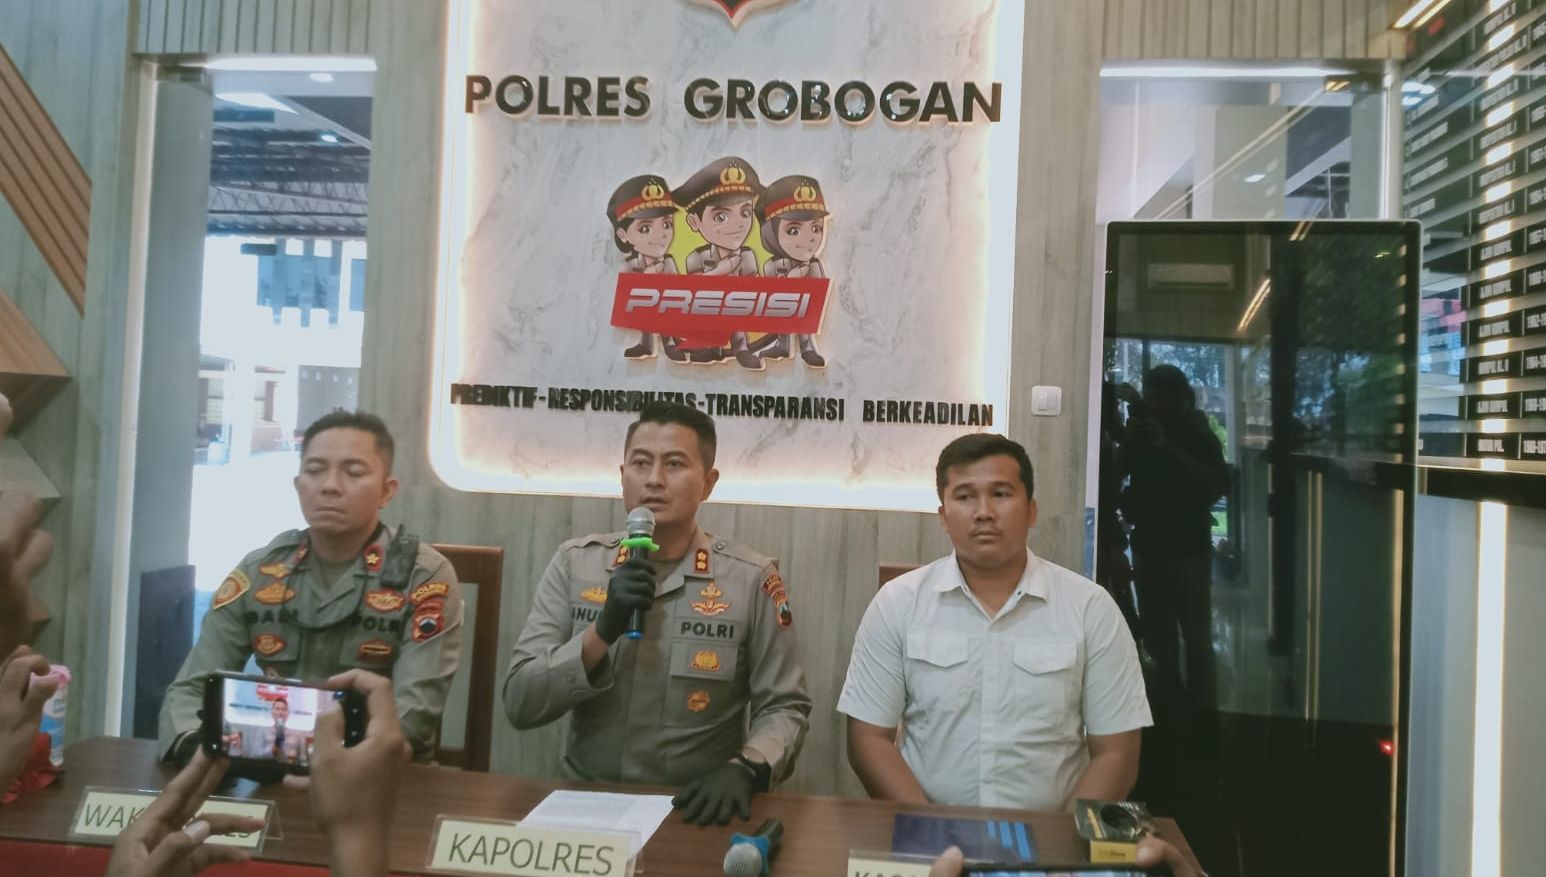 Kapolres Grobogan AKBP Dedy Anung Kurniawan saat memberikan keterangan di hadapan awak media terkait tawuran tersebut.